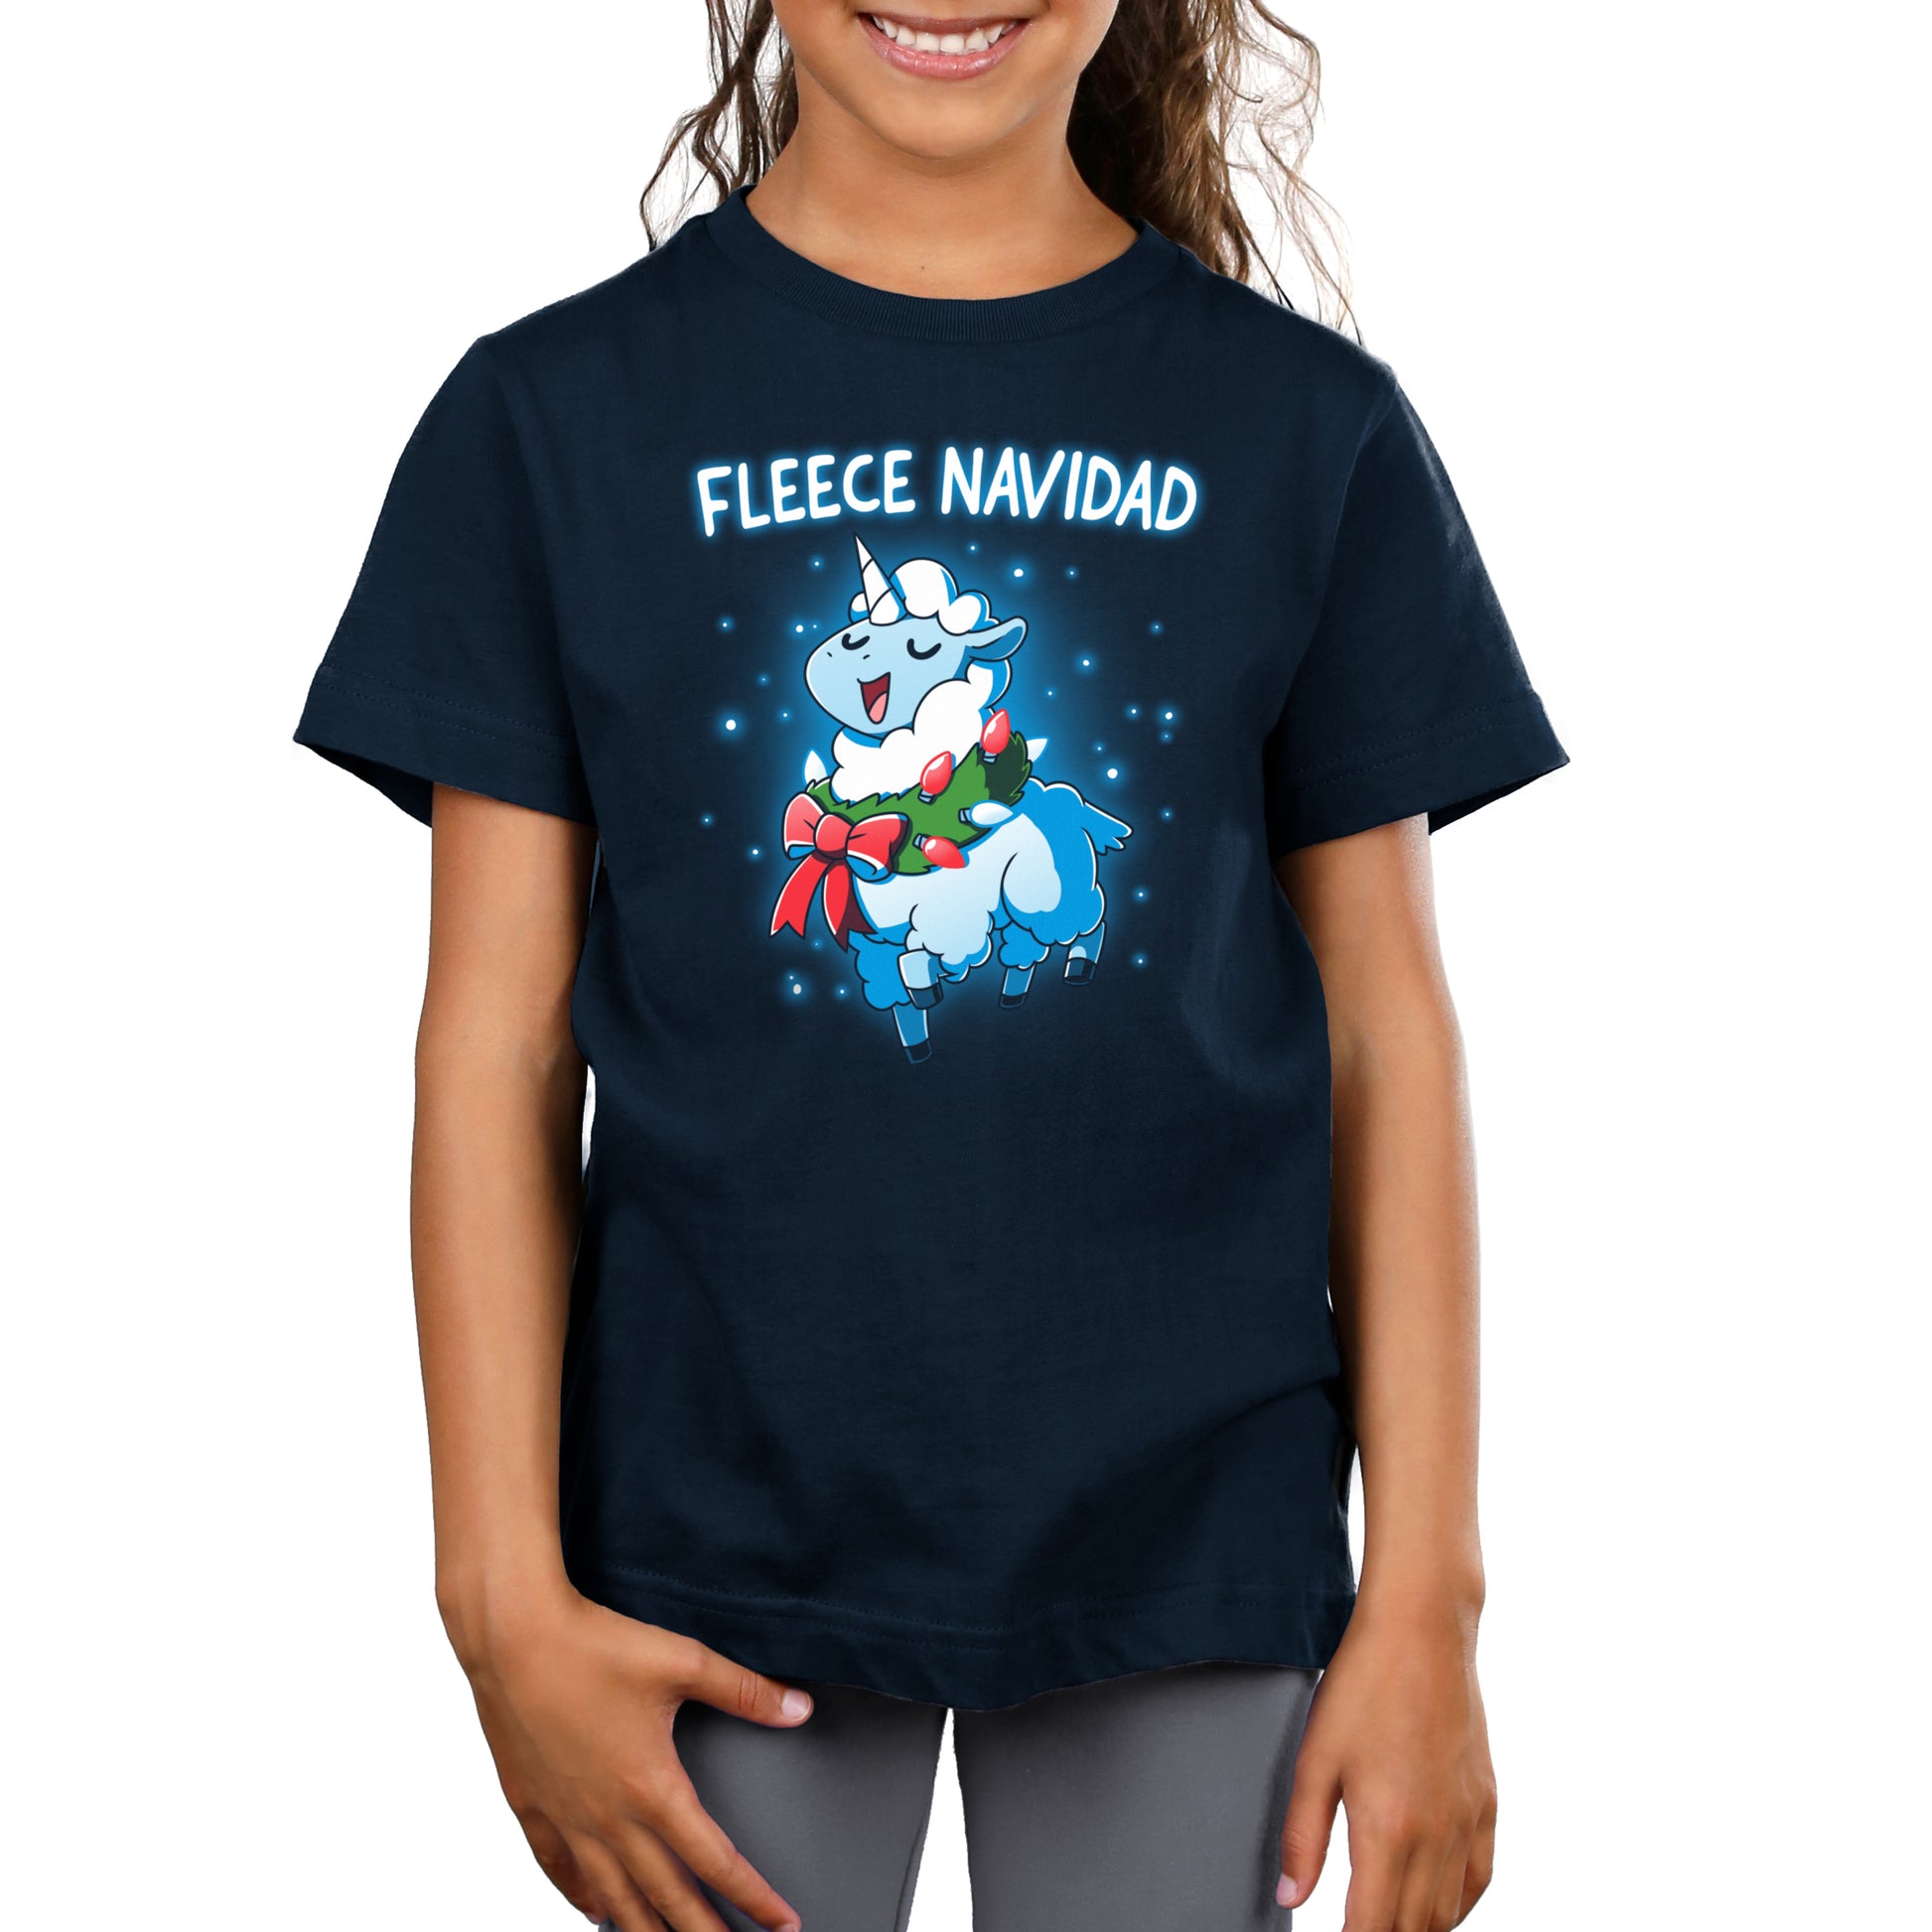 A girl wearing a t-shirt that says Fleece Navidad by TeeTurtle.